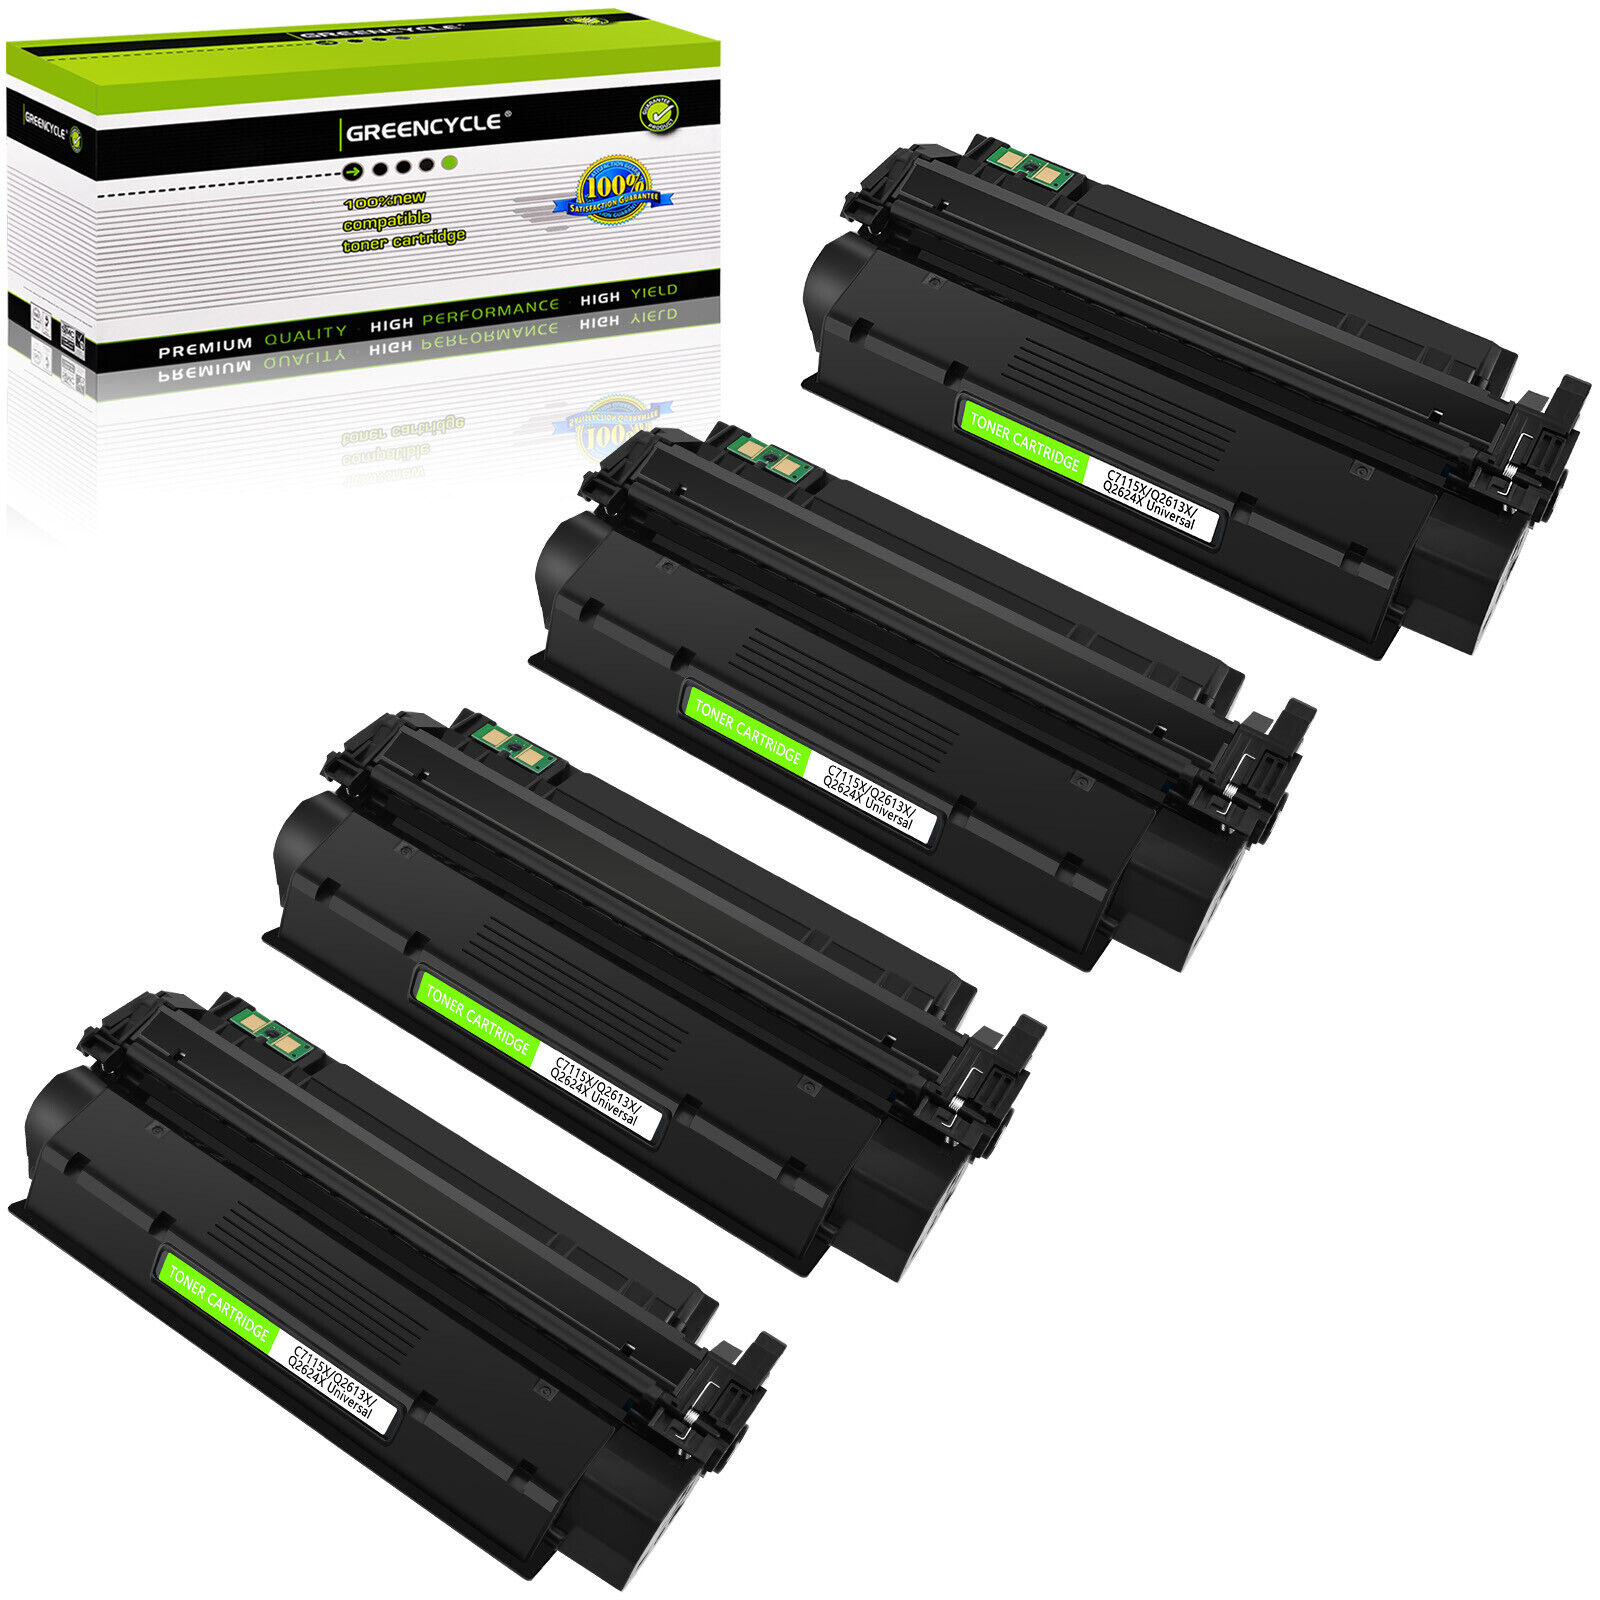 4 Pack C7115X Black High Yield Toner Fit for HP LaserJet 1220 3310 3380 3320NMFP